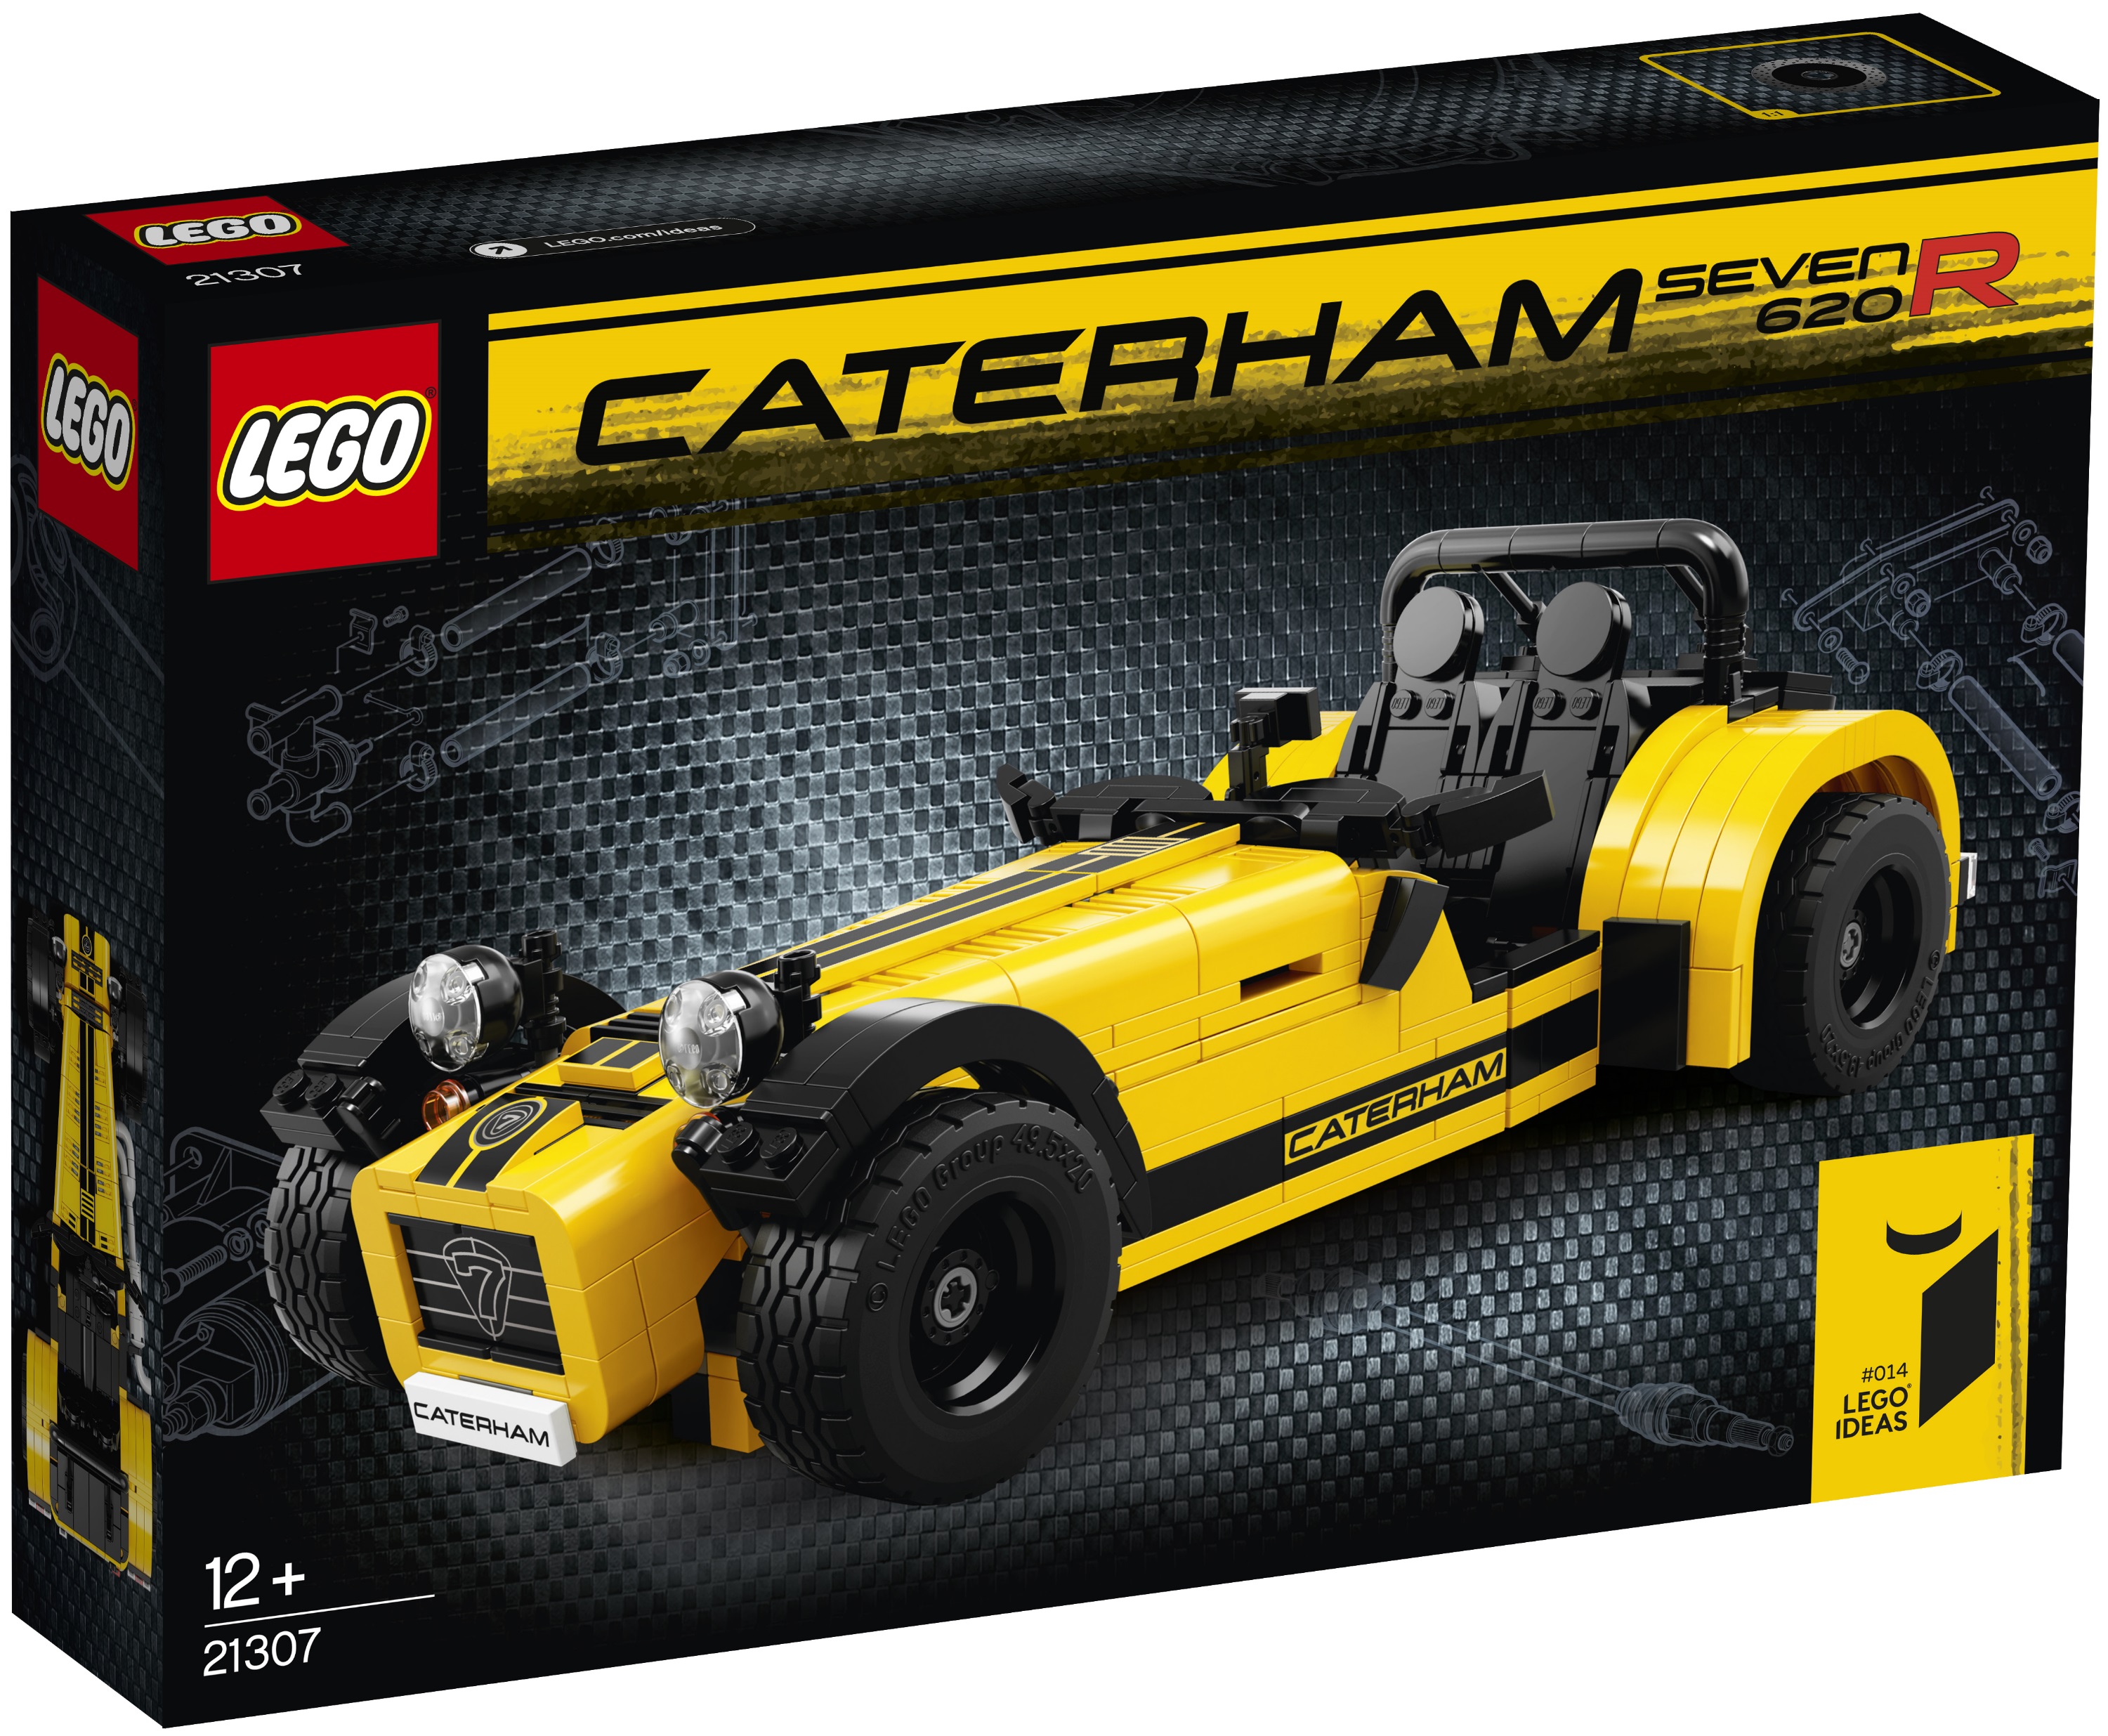 LEGO IDEAS 21037 Caterham Seven 620R